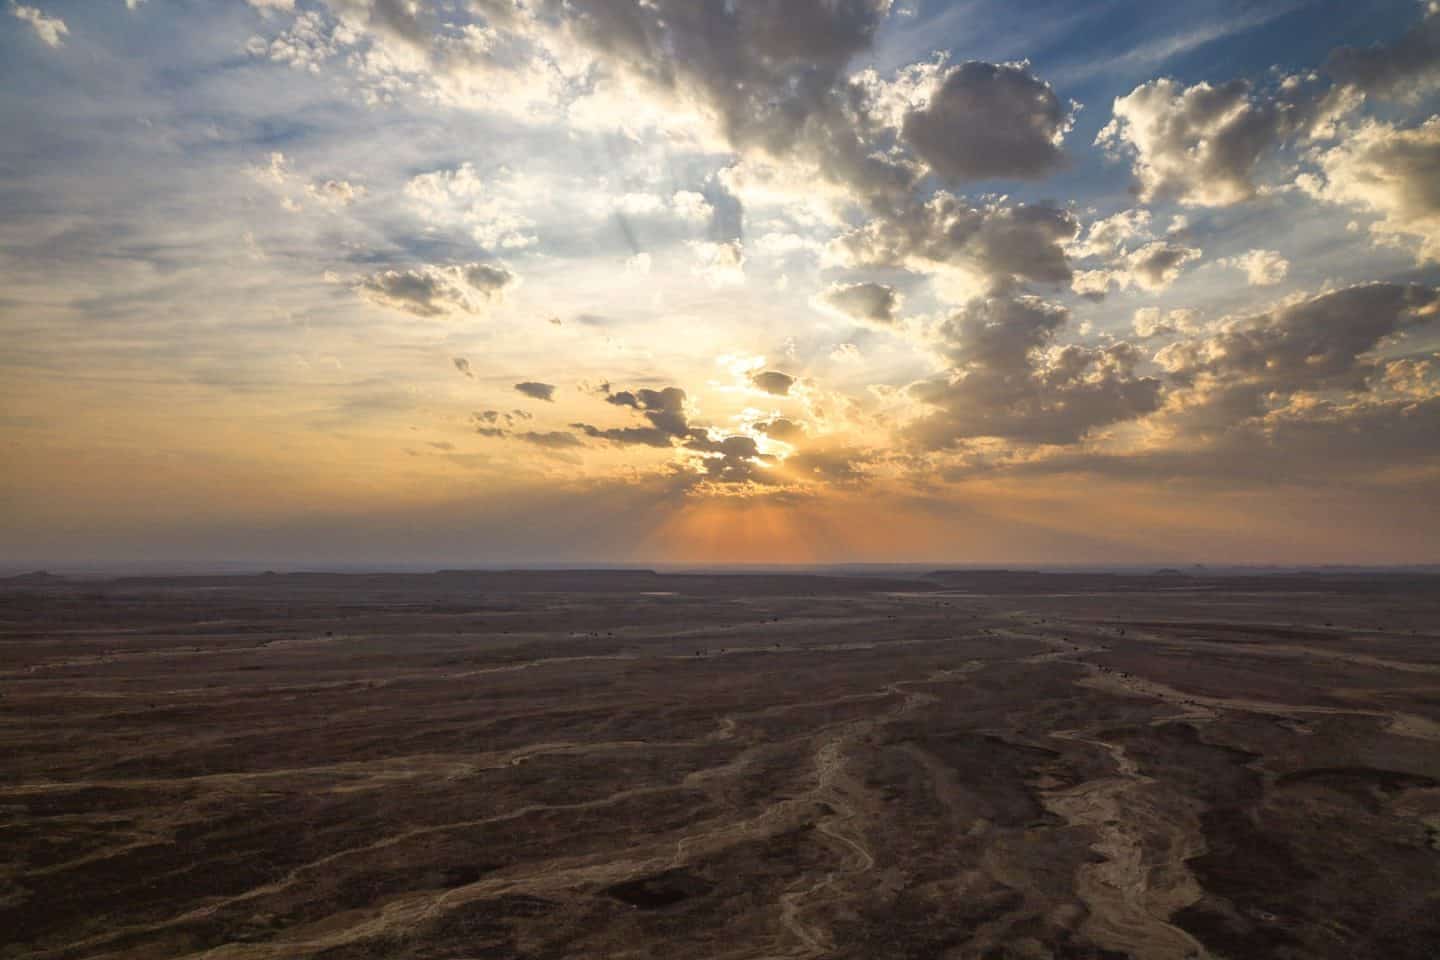 Edge of the World Riyadh Tour, Sunset at Edge of the World